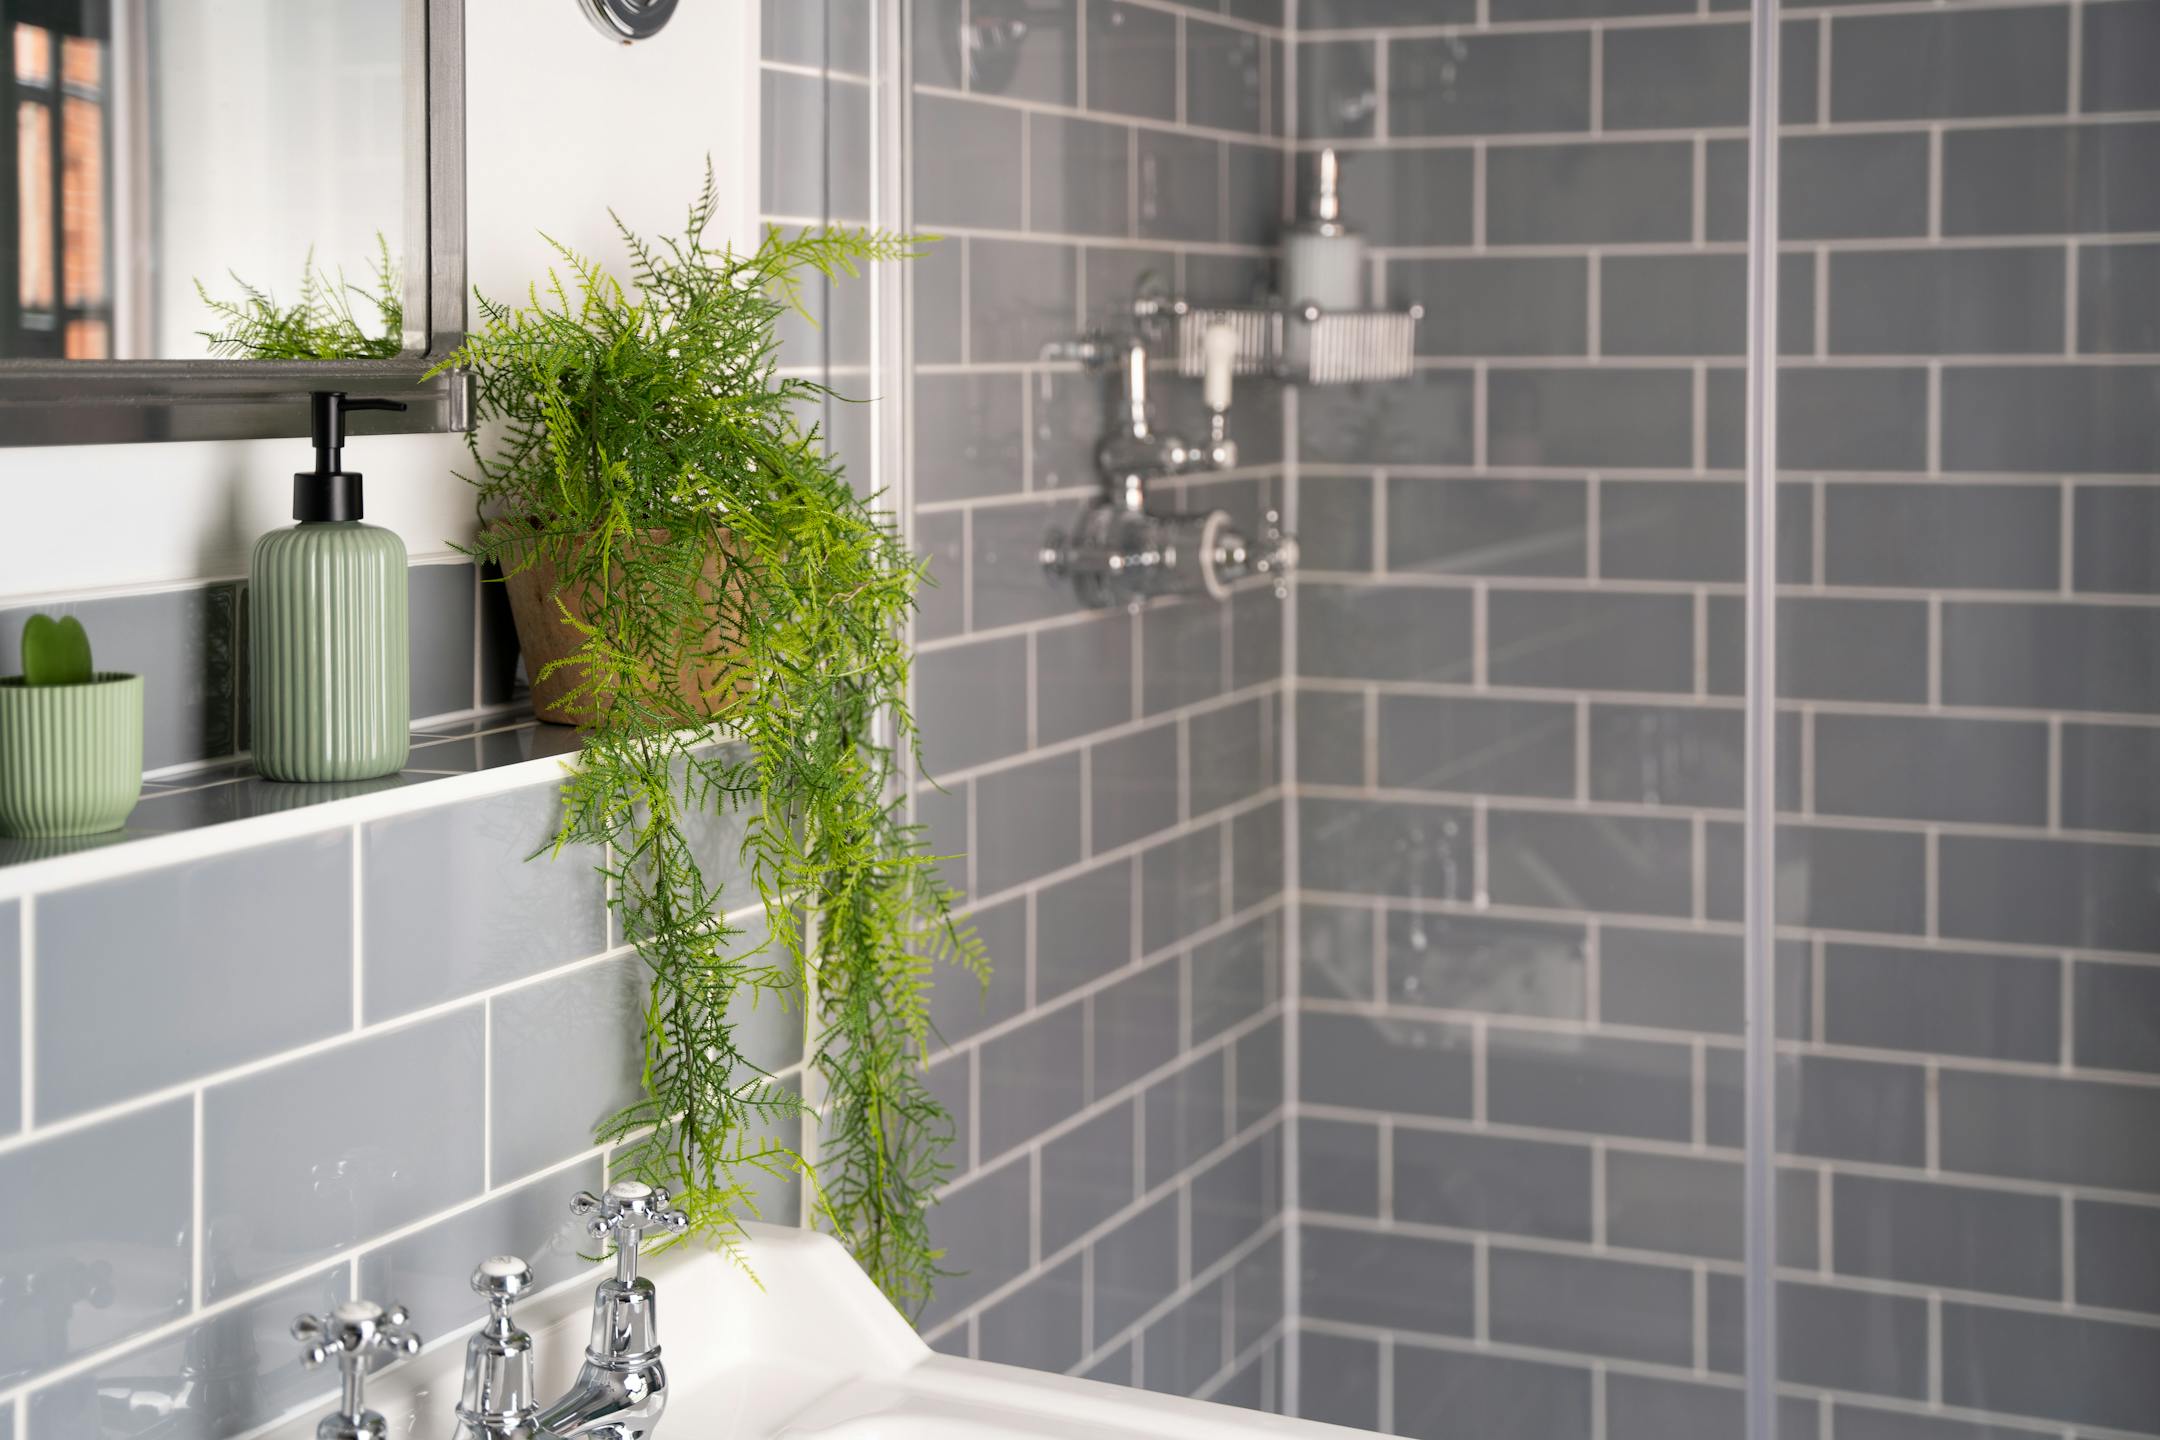 Artificial hanging plumosus fern in grey tiled bathroom